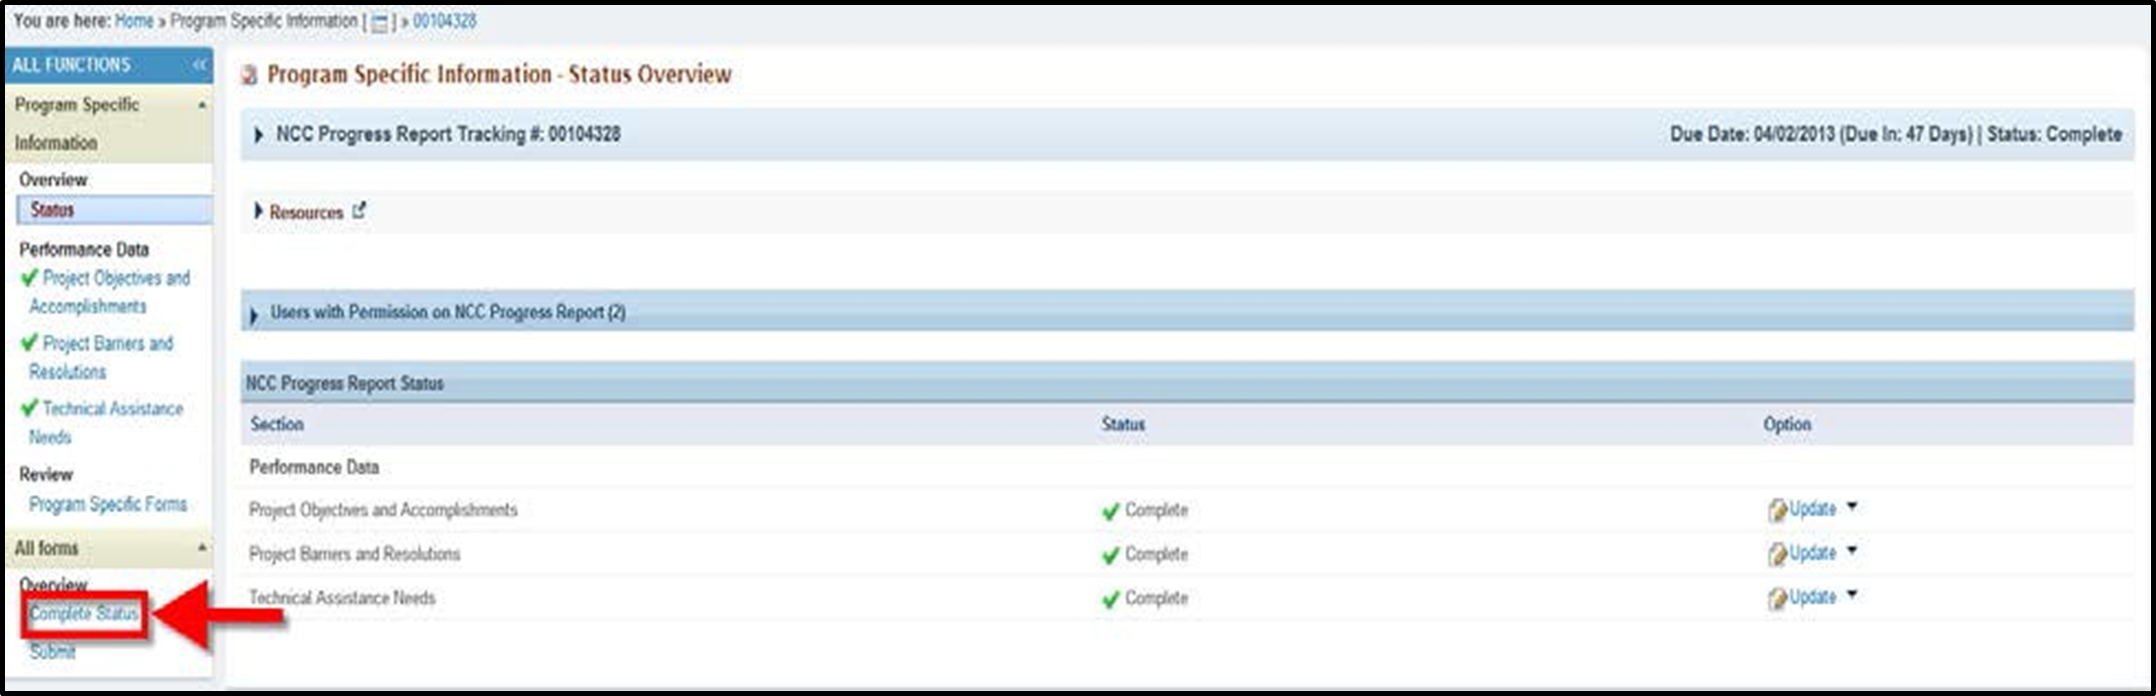 Screenshot of Program specific information status overview complete status action